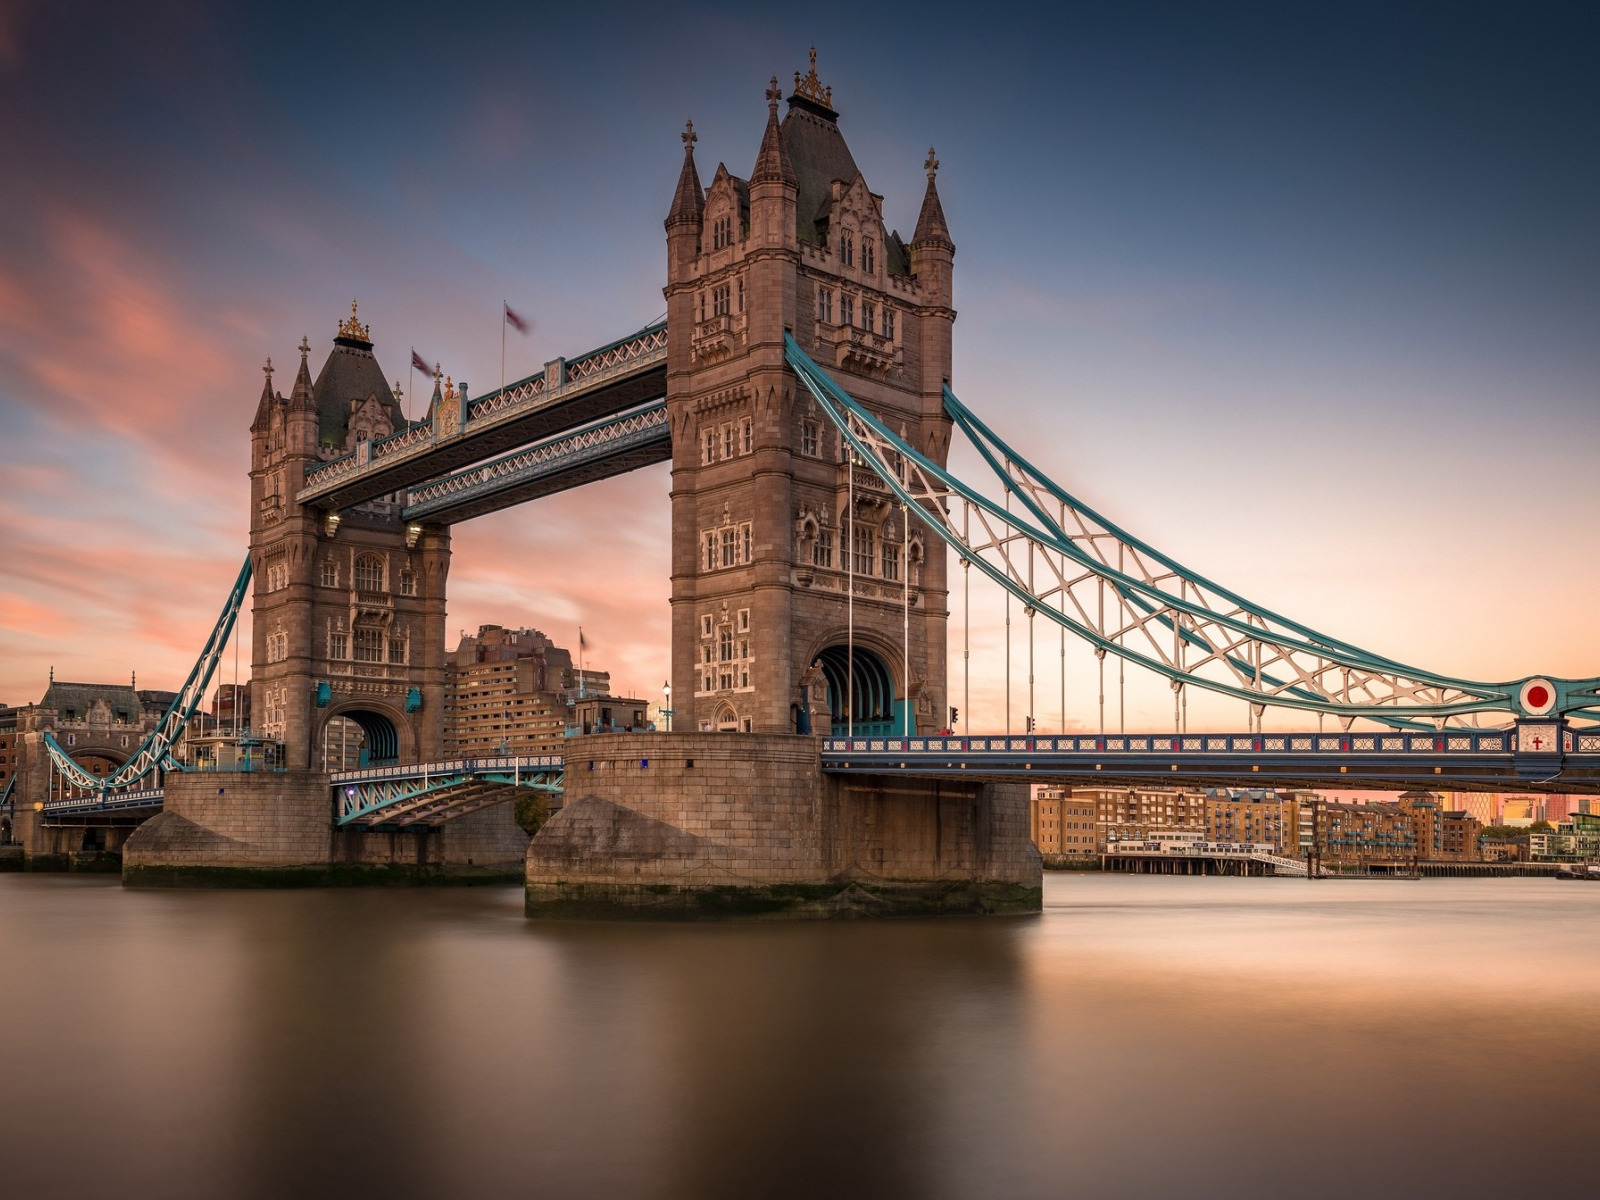 Download wallpaper London, UK, Tower Bridge London, section city in  resolution 1600x1200